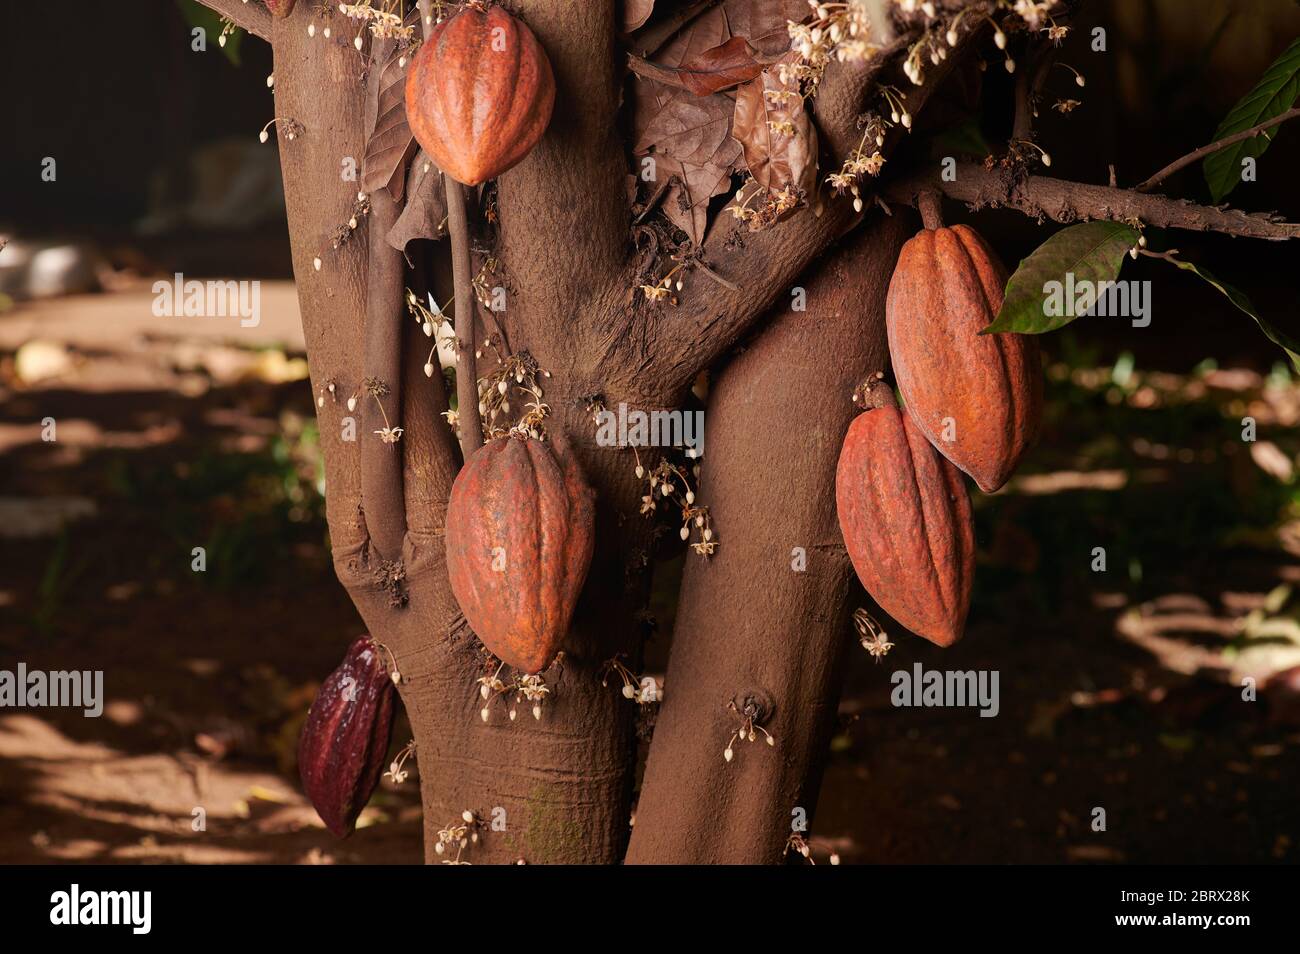 Braune Kakaoschoten am Baum hängen an Ästen aus der Nähe Stockfoto